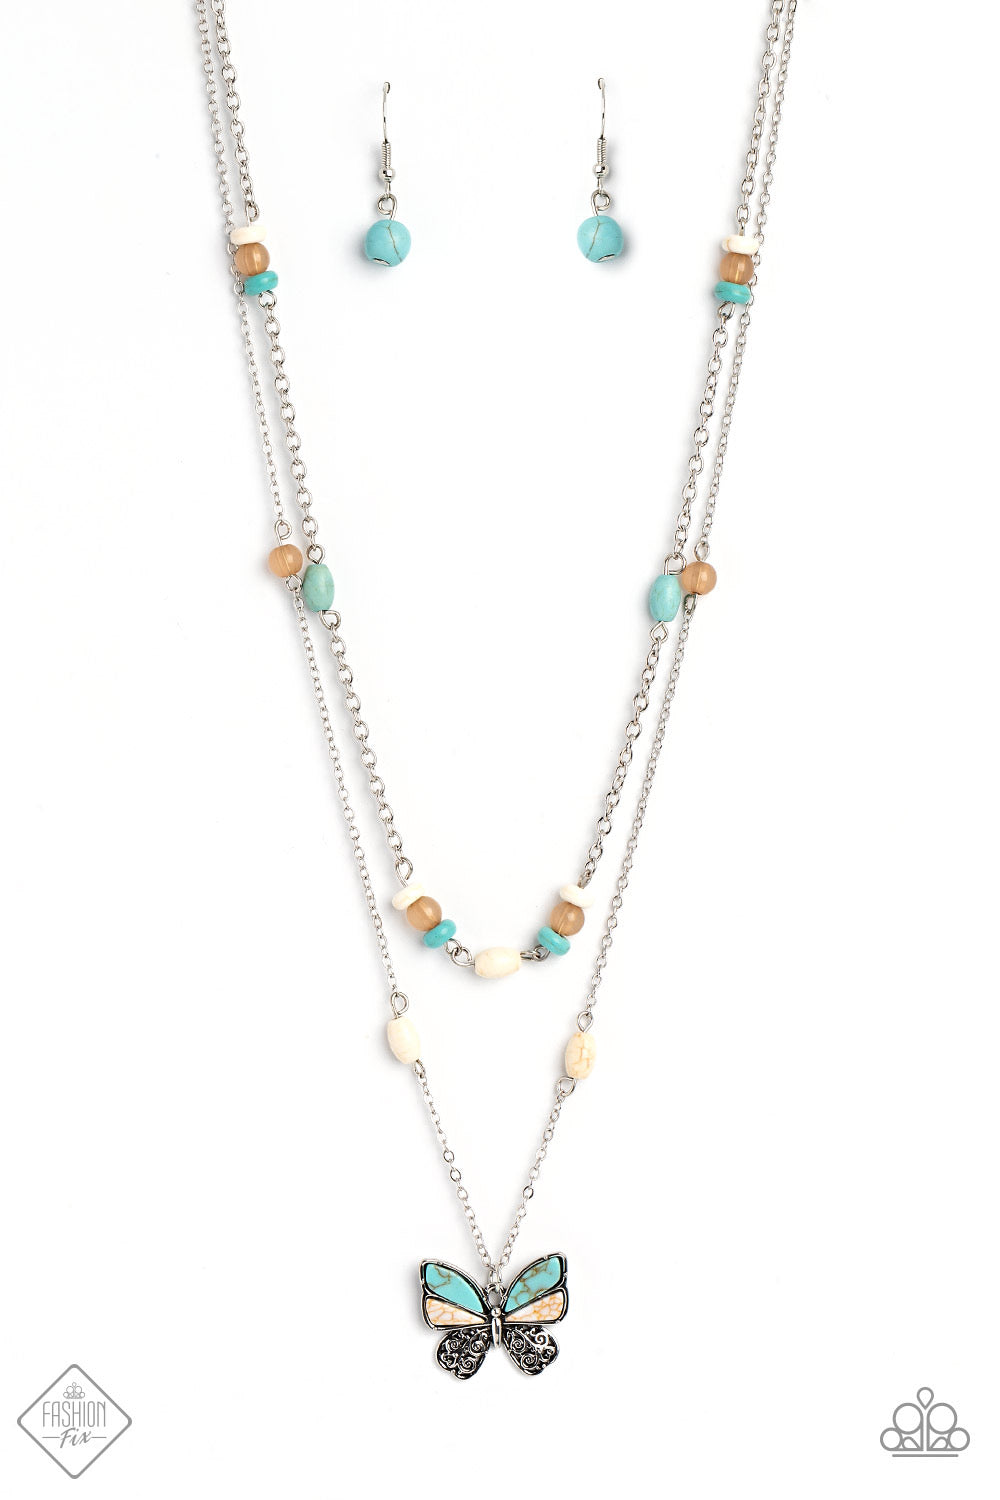 Paparazzi Free-Spirited Flutter - Blue Necklace - Fashion Fix January 2023-Paparazzi Jewelry Images 